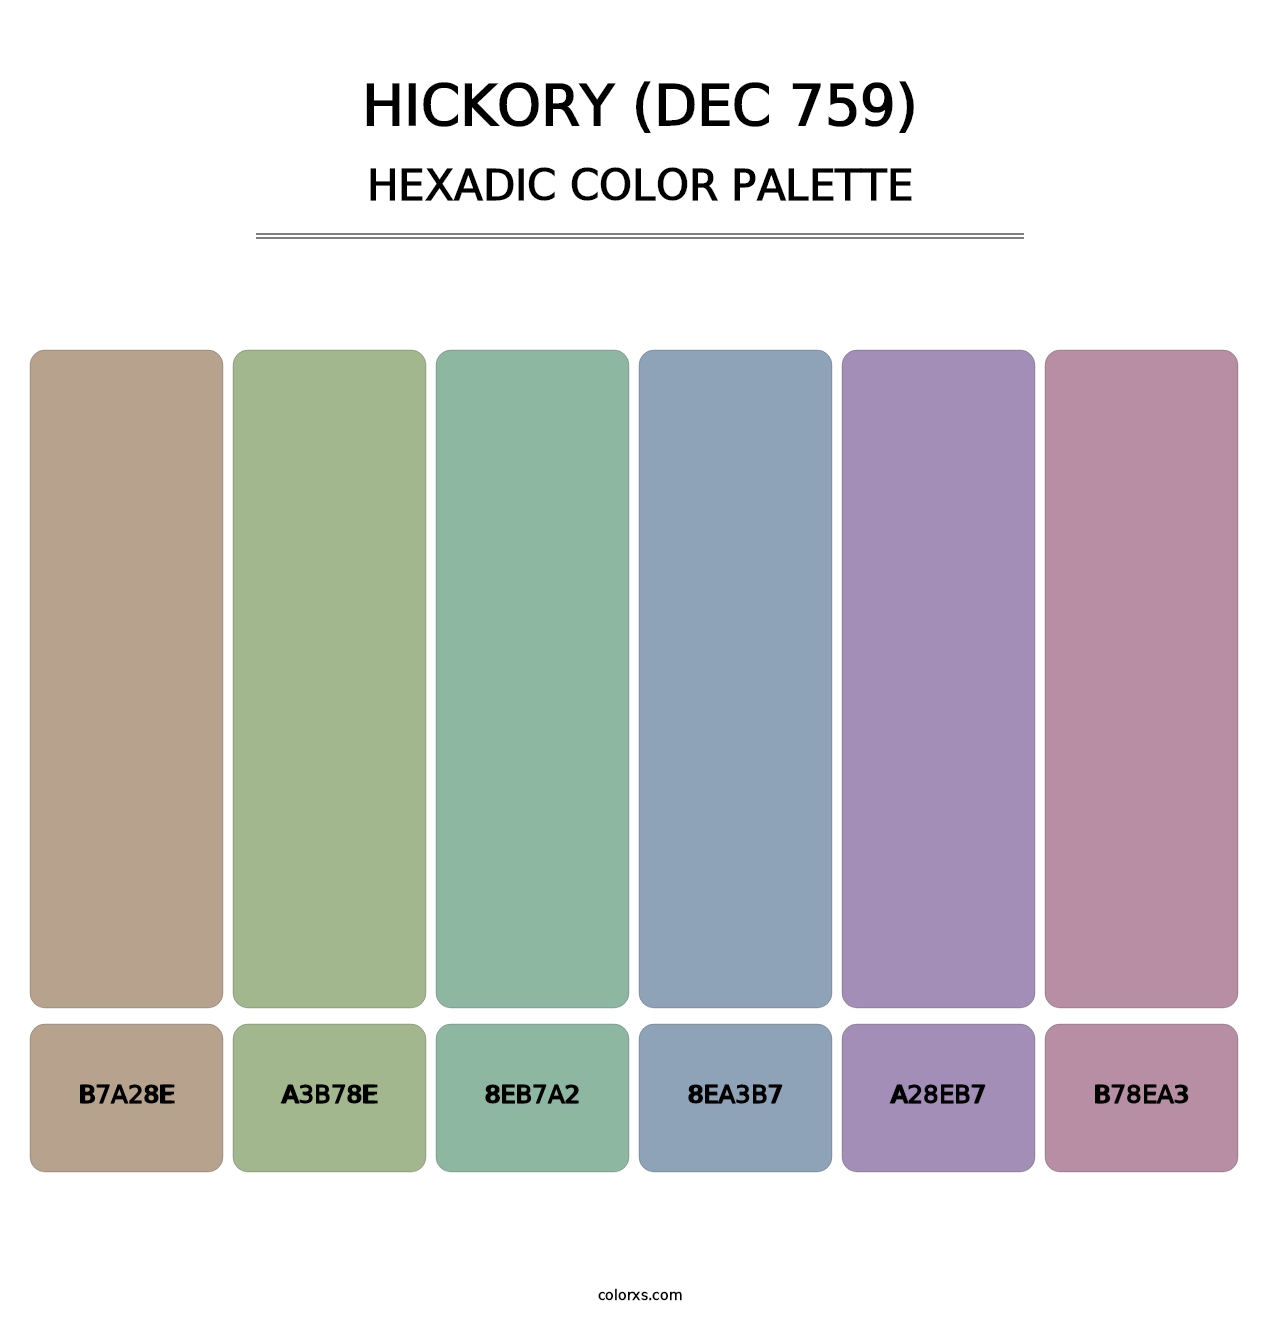 Hickory (DEC 759) - Hexadic Color Palette